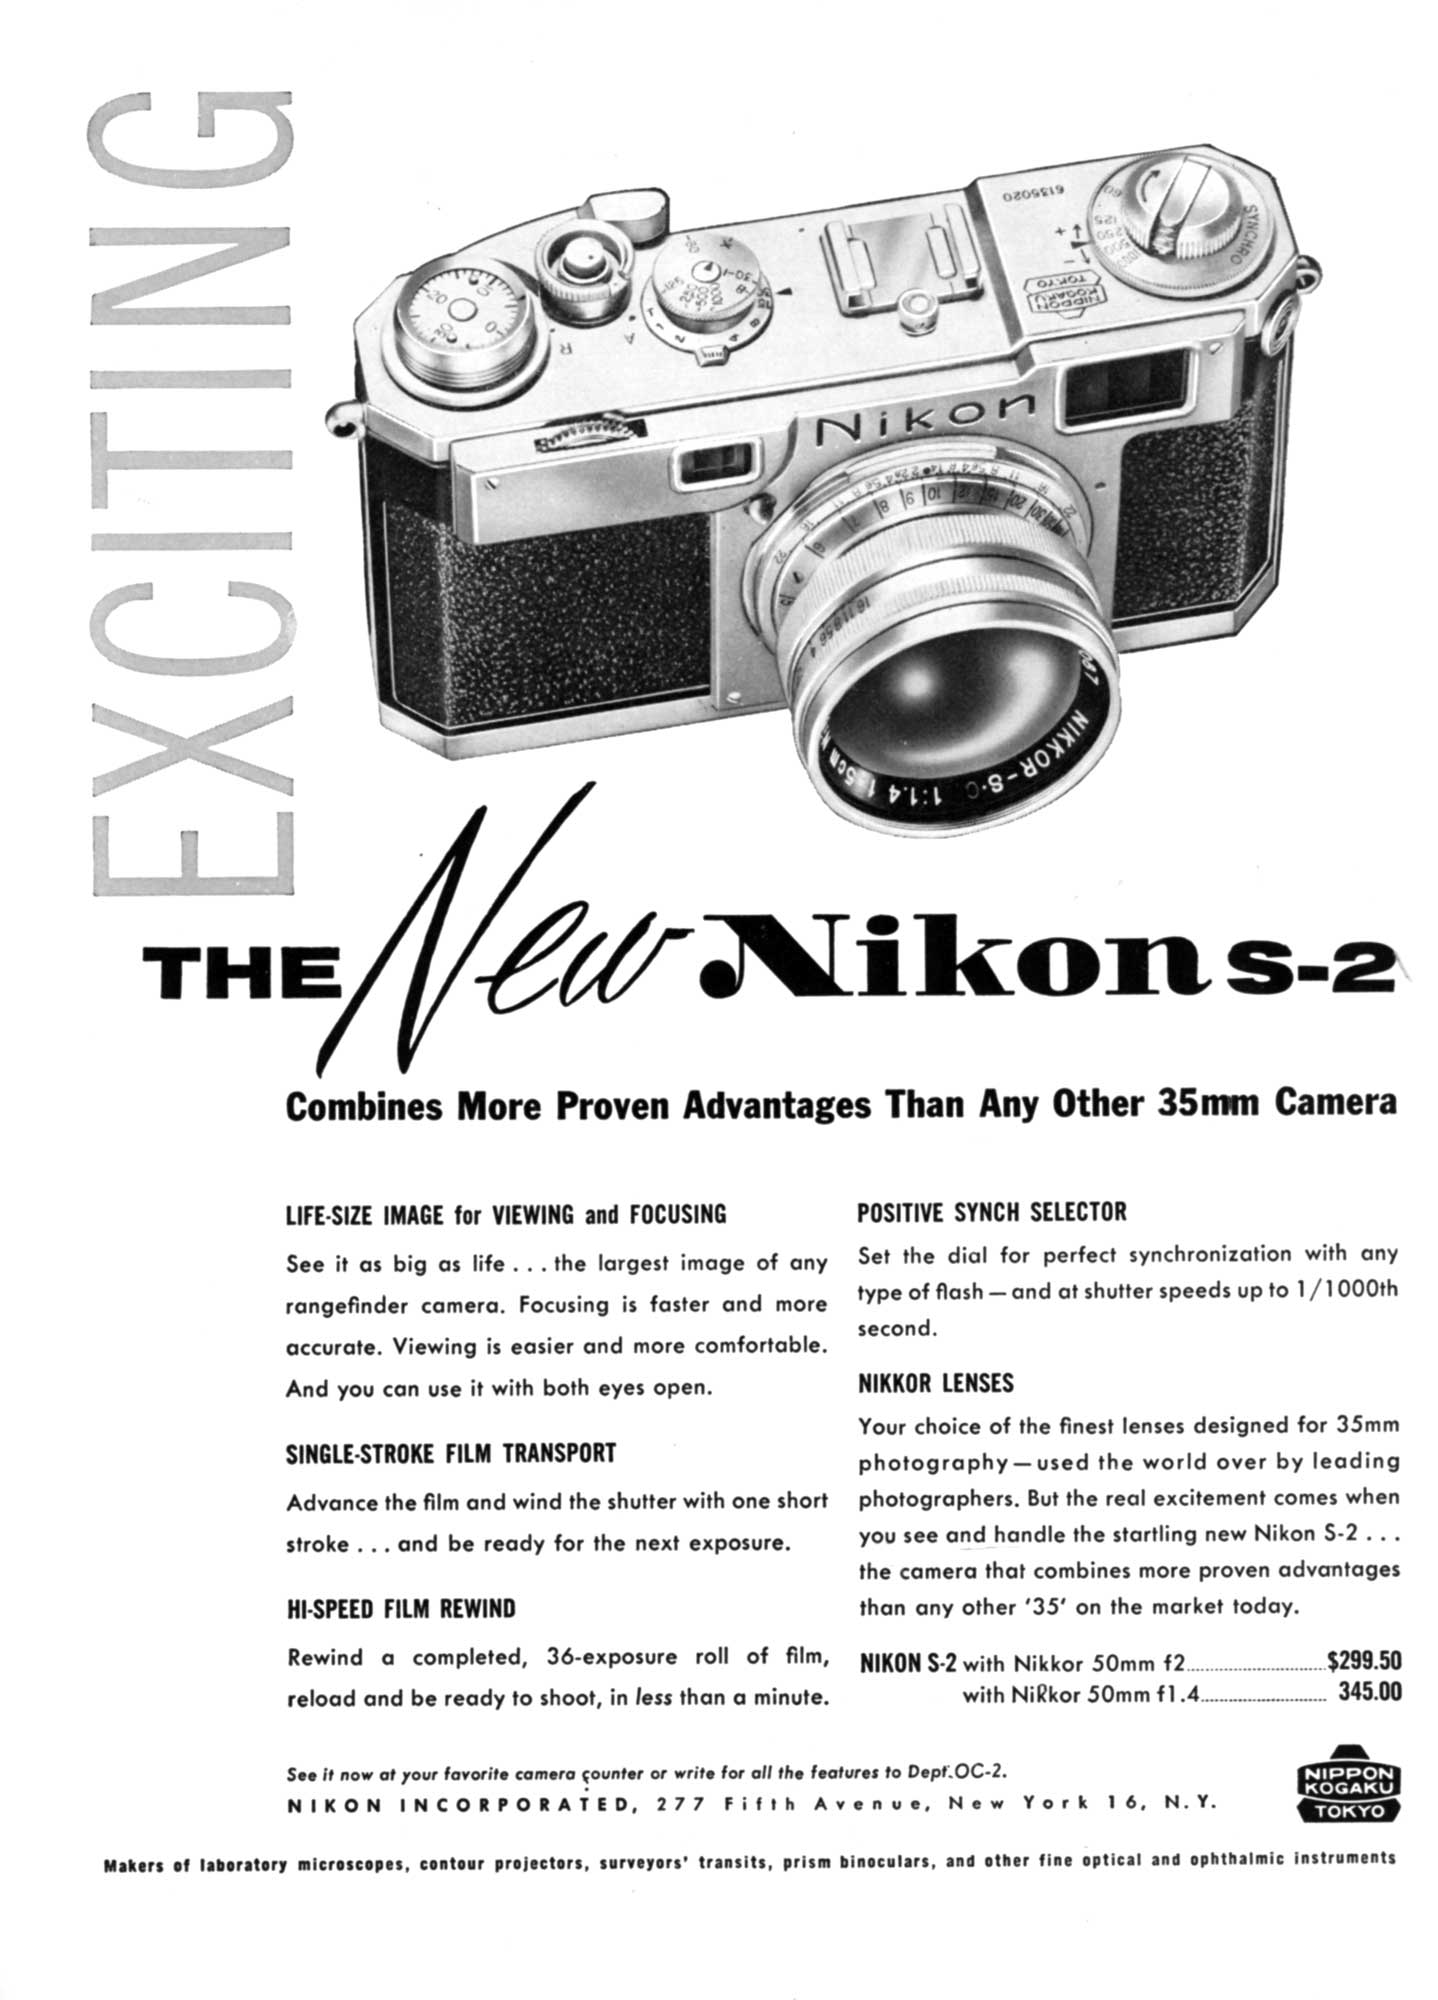 Nikon SP (1957) - mike eckman dot com